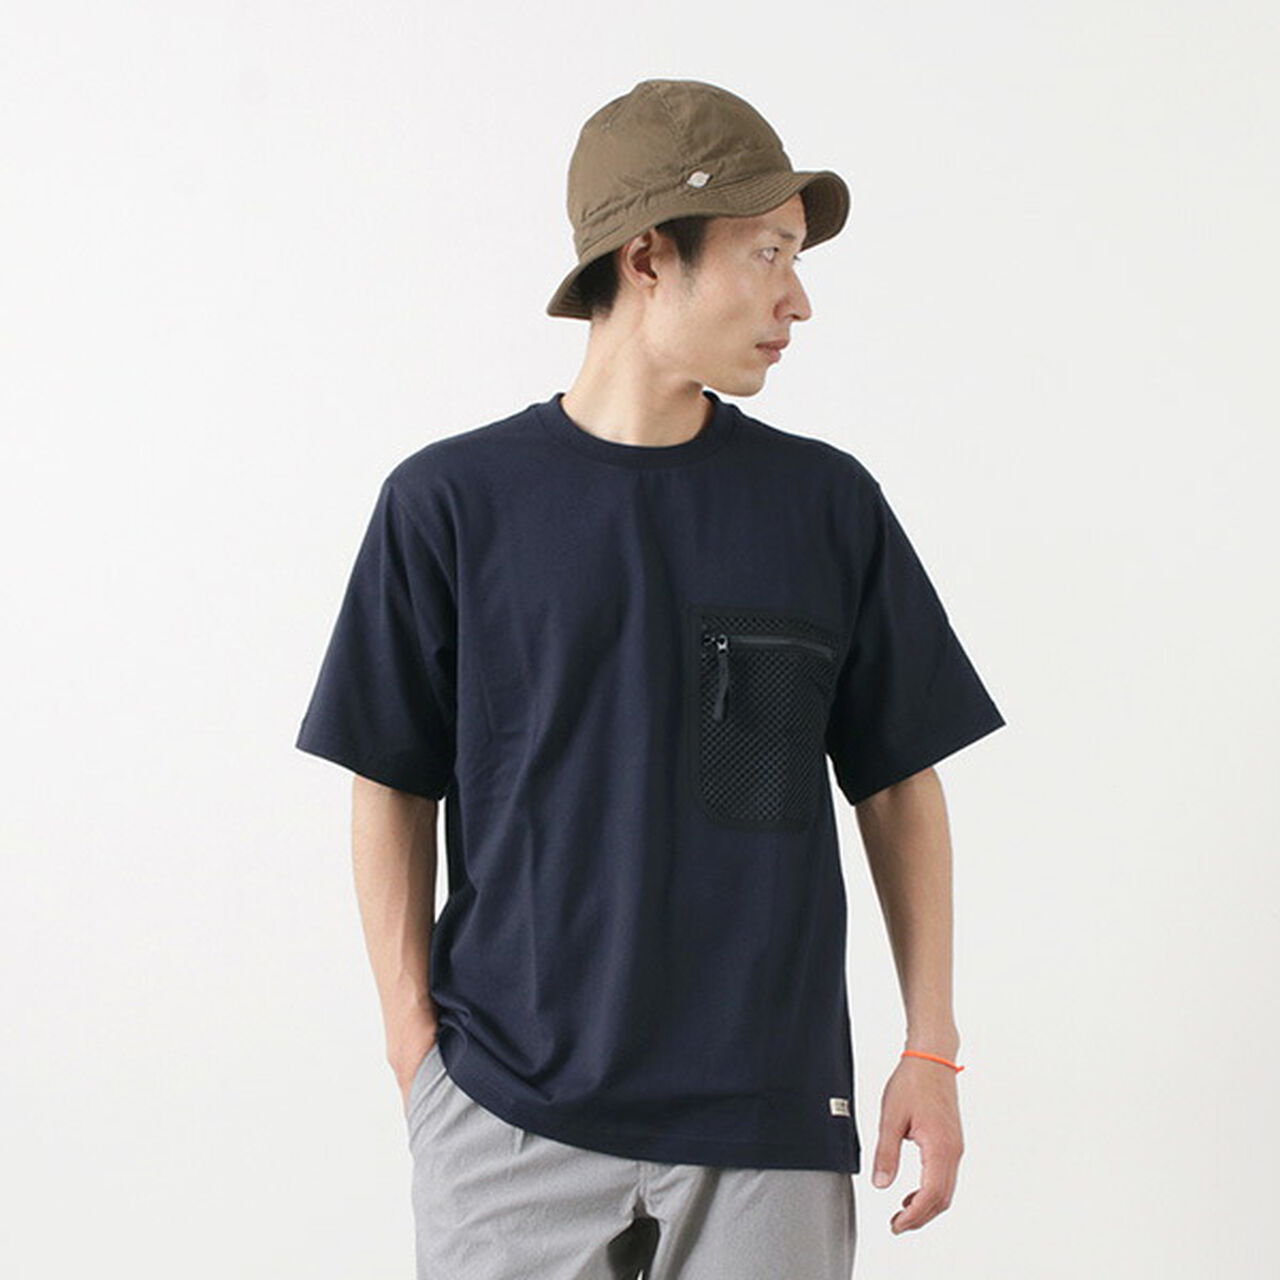 SC Cotton T-Shirt Short Sleeve,Navy, large image number 0